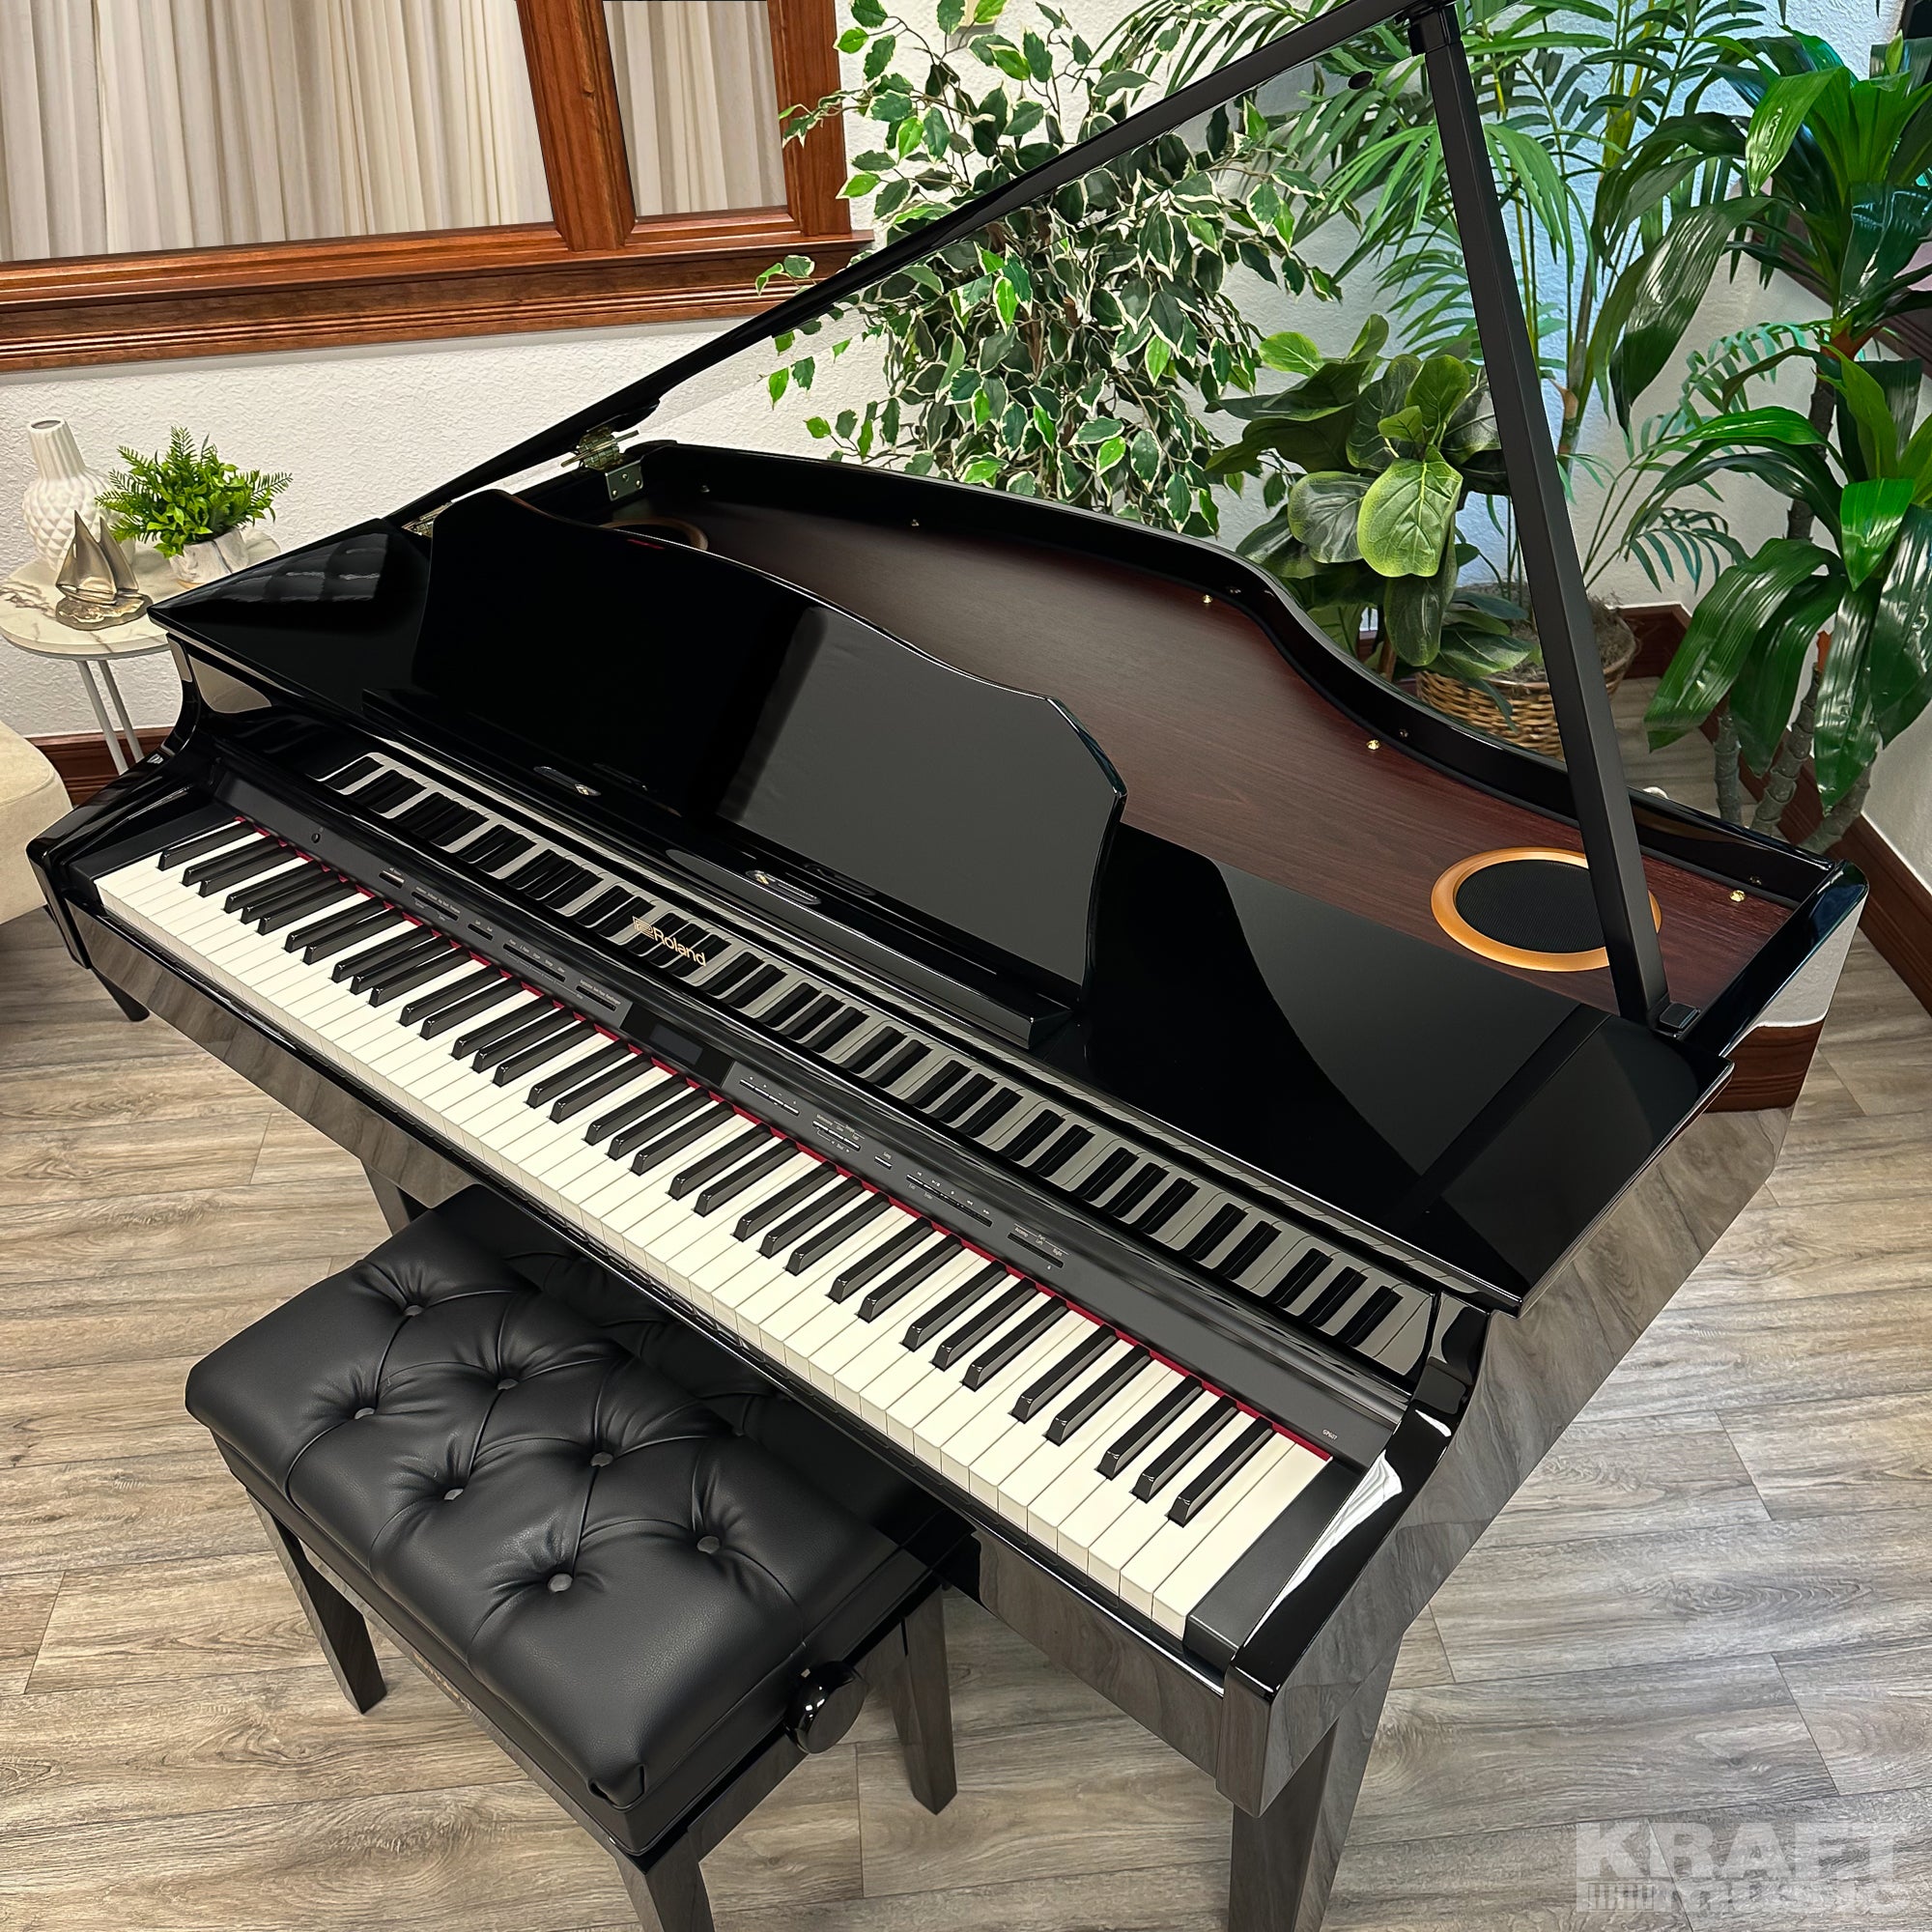 Roland GP607 Digital Grand Piano - Polished Ebony - left angle from above